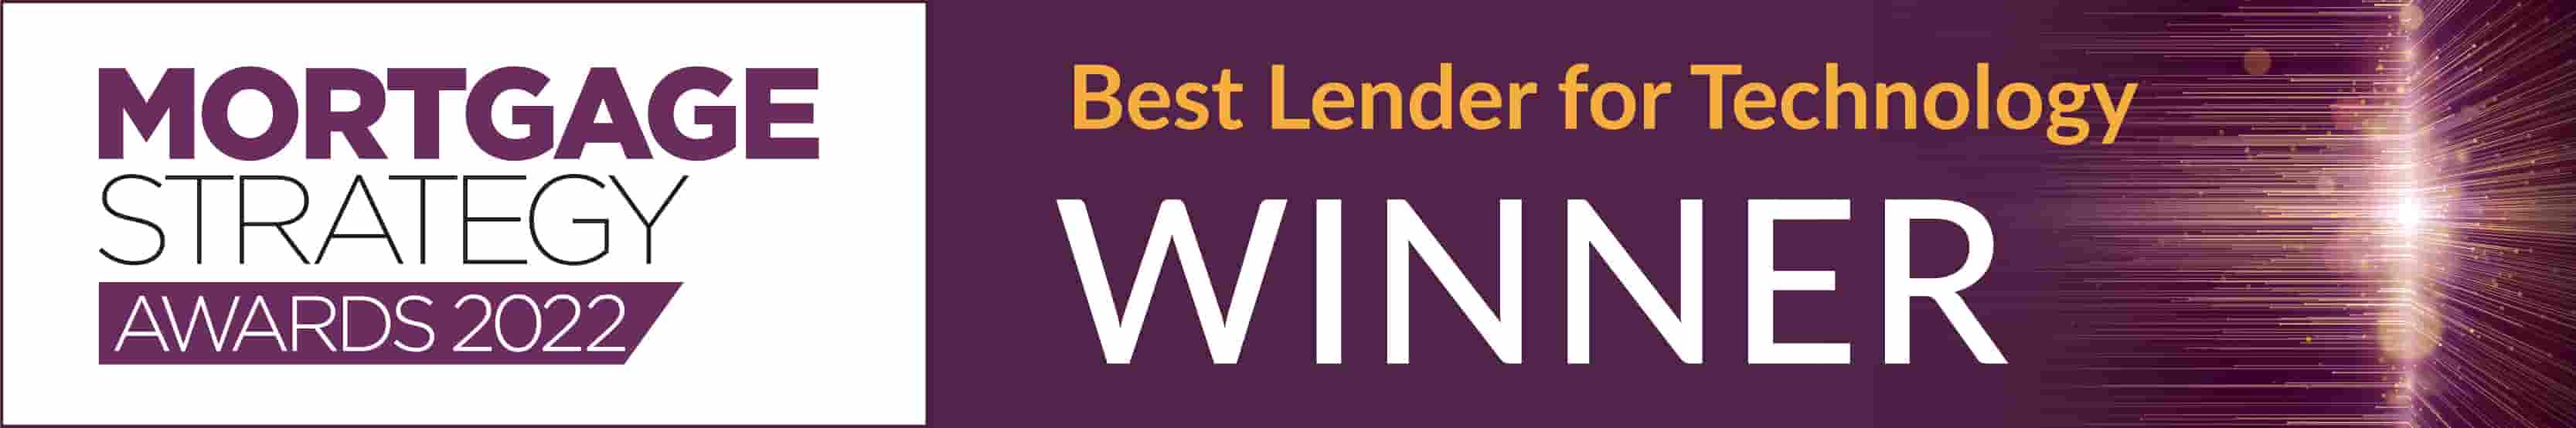 Best Lender for Technology - Mortgage Strategy Awards 2022